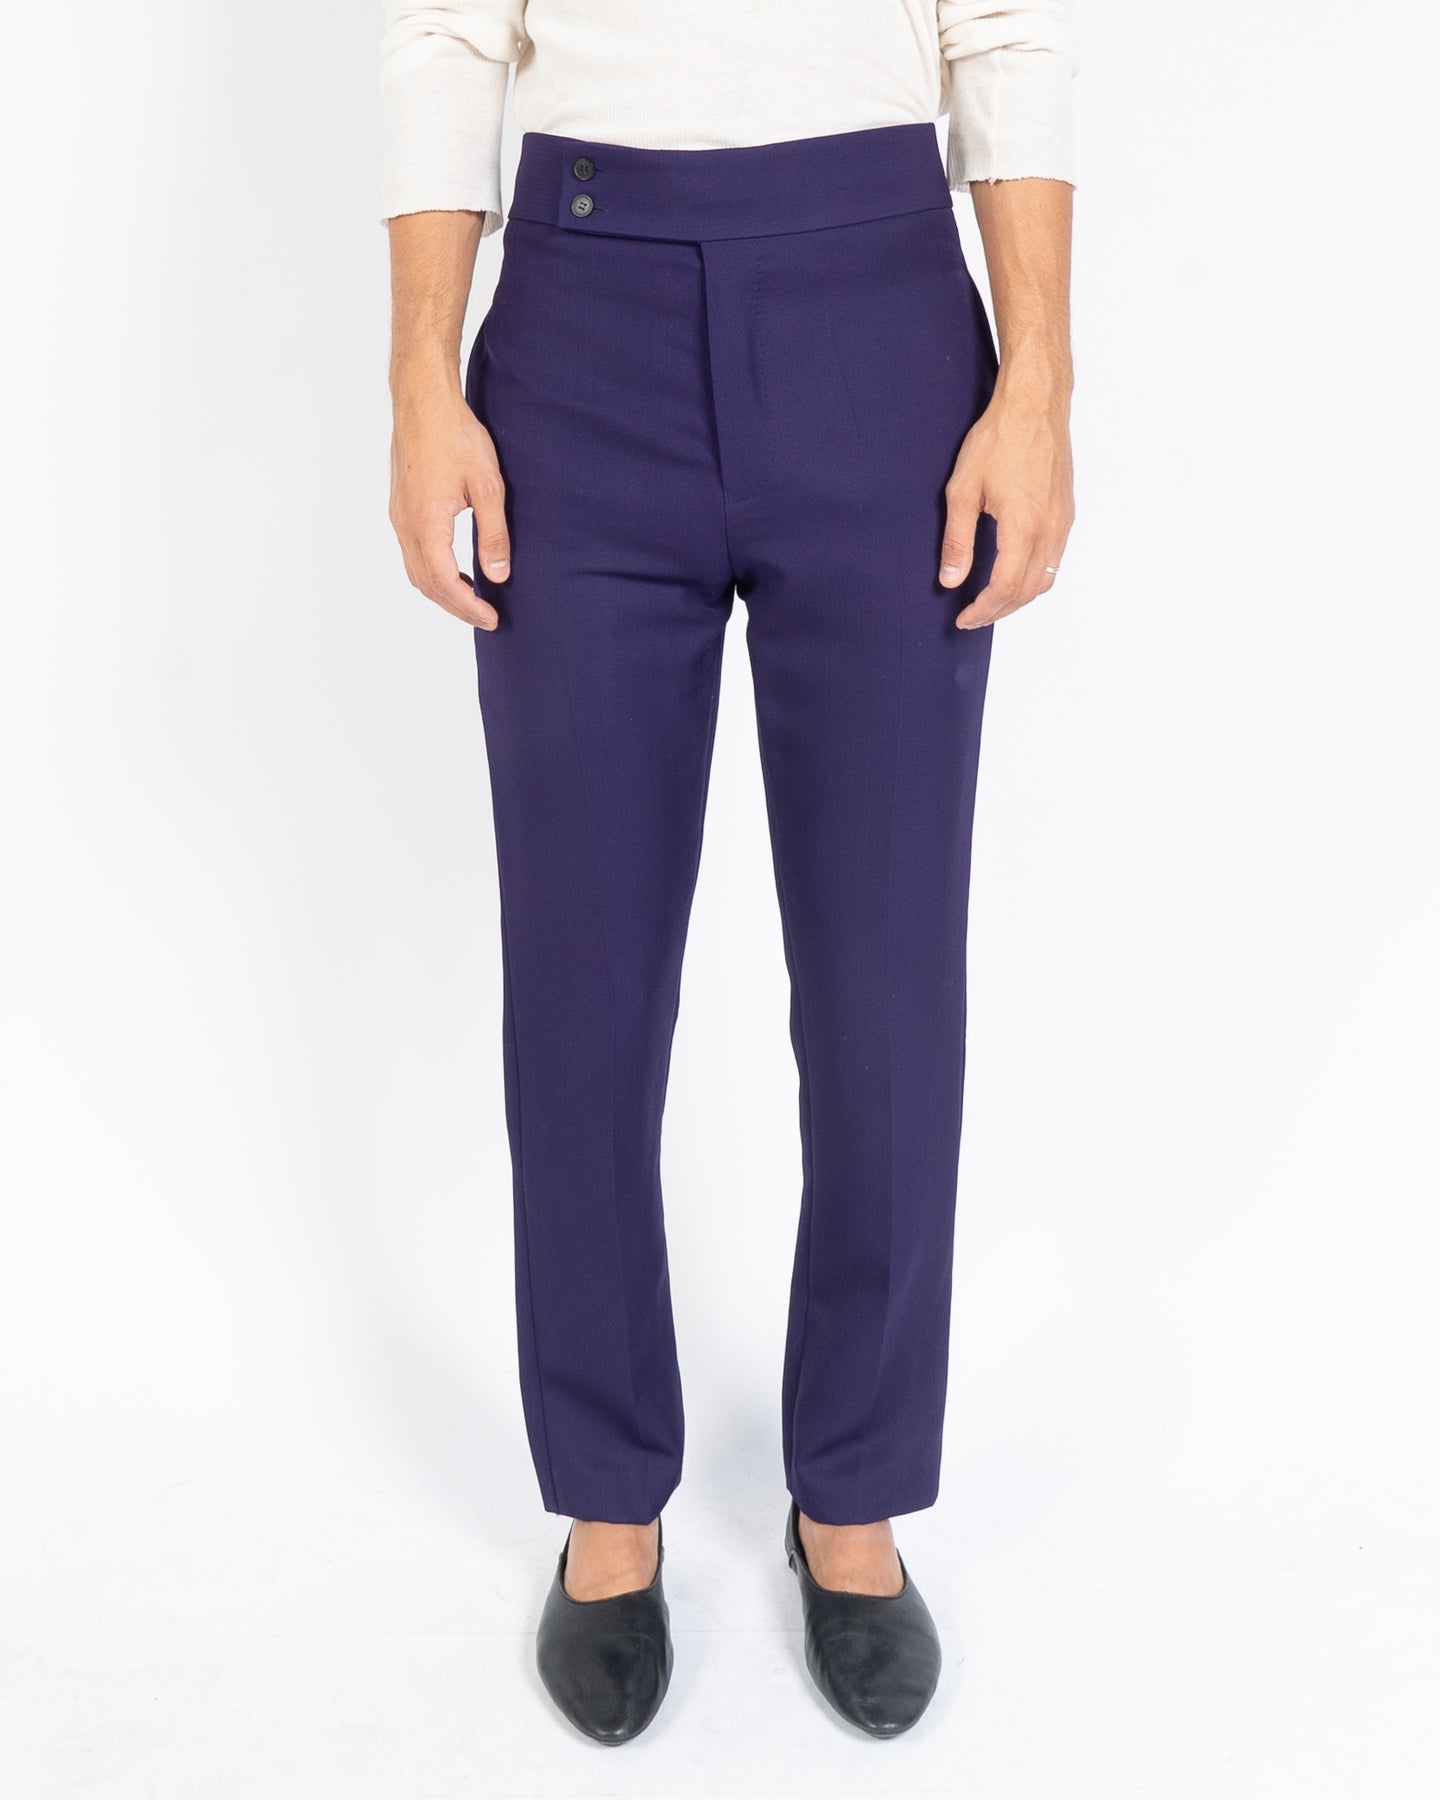 FW17 Classic Calder Violet Trousers Sample